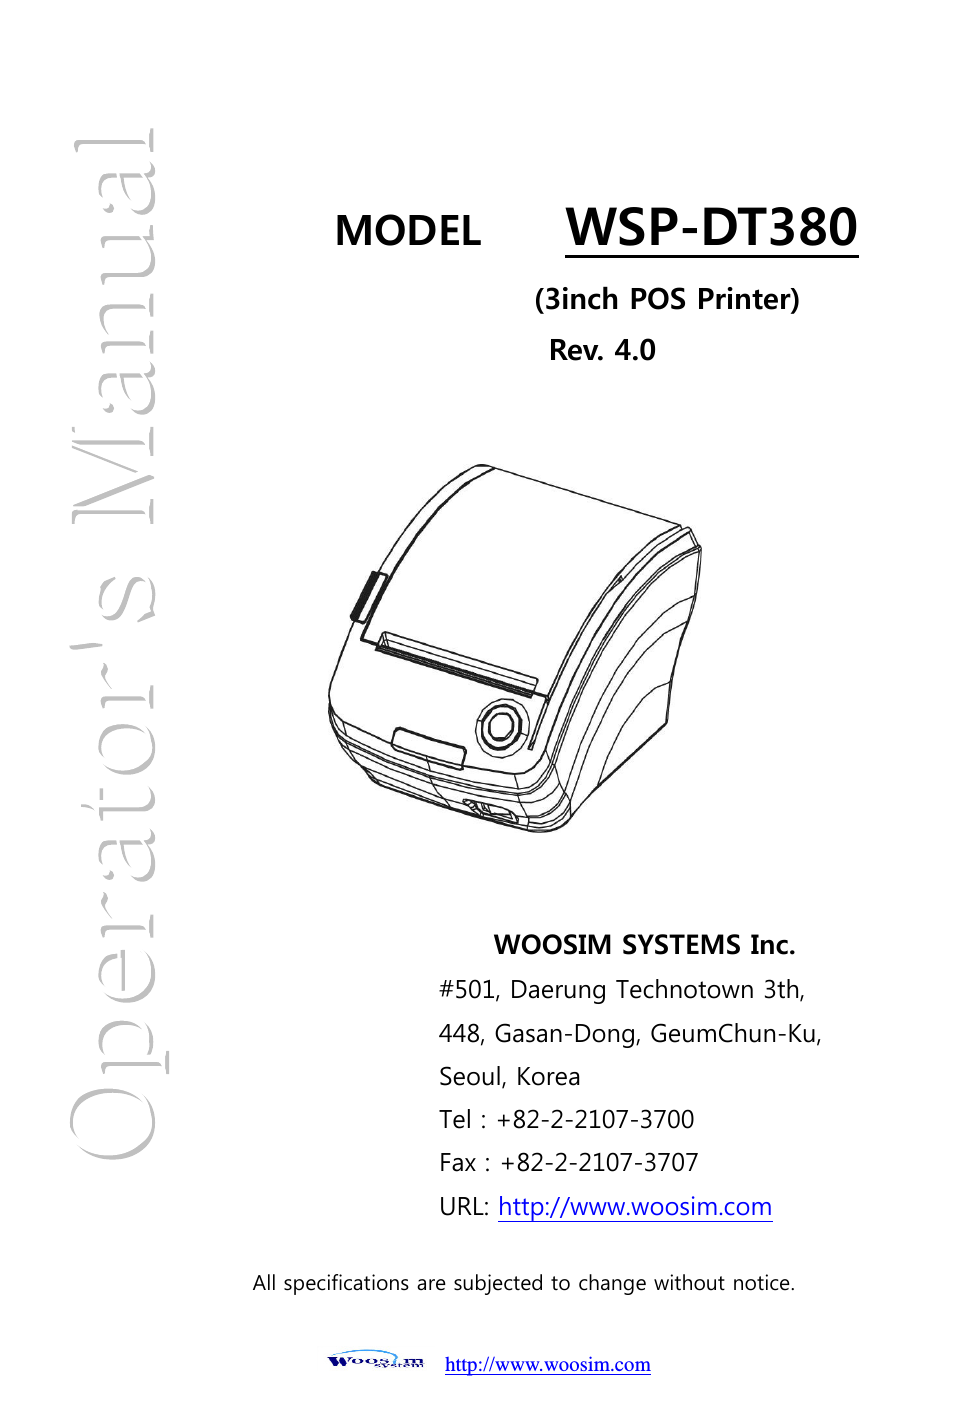  http://www.woosim.com                                                         MODEL        WSP-DT380    WOOSIM SYSTEMS Inc. #501, Daerung Technotown 3th, 448, Gasan-Dong, GeumChun-Ku,   Seoul, Korea Tel : +82-2-2107-3700 Fax : +82-2-2107-3707 URL: http://www.woosim.com  (3inch POS Printer) Rev. 4.0  All specifications are subjected to change without notice.  